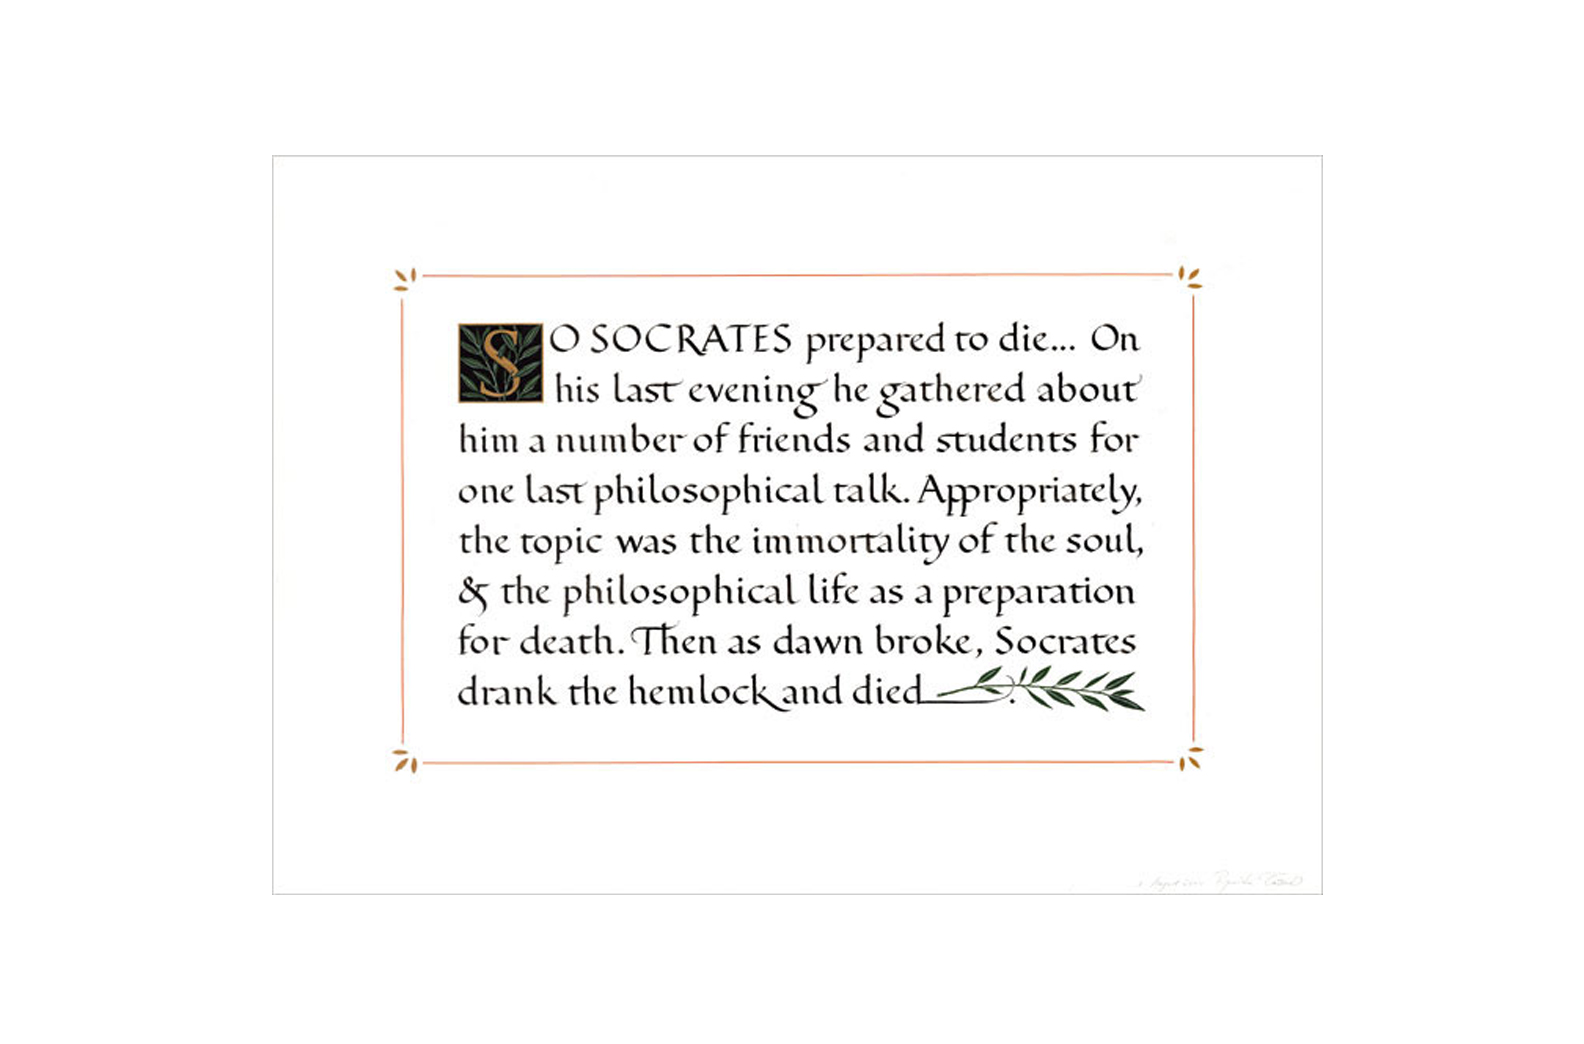 So Socrates